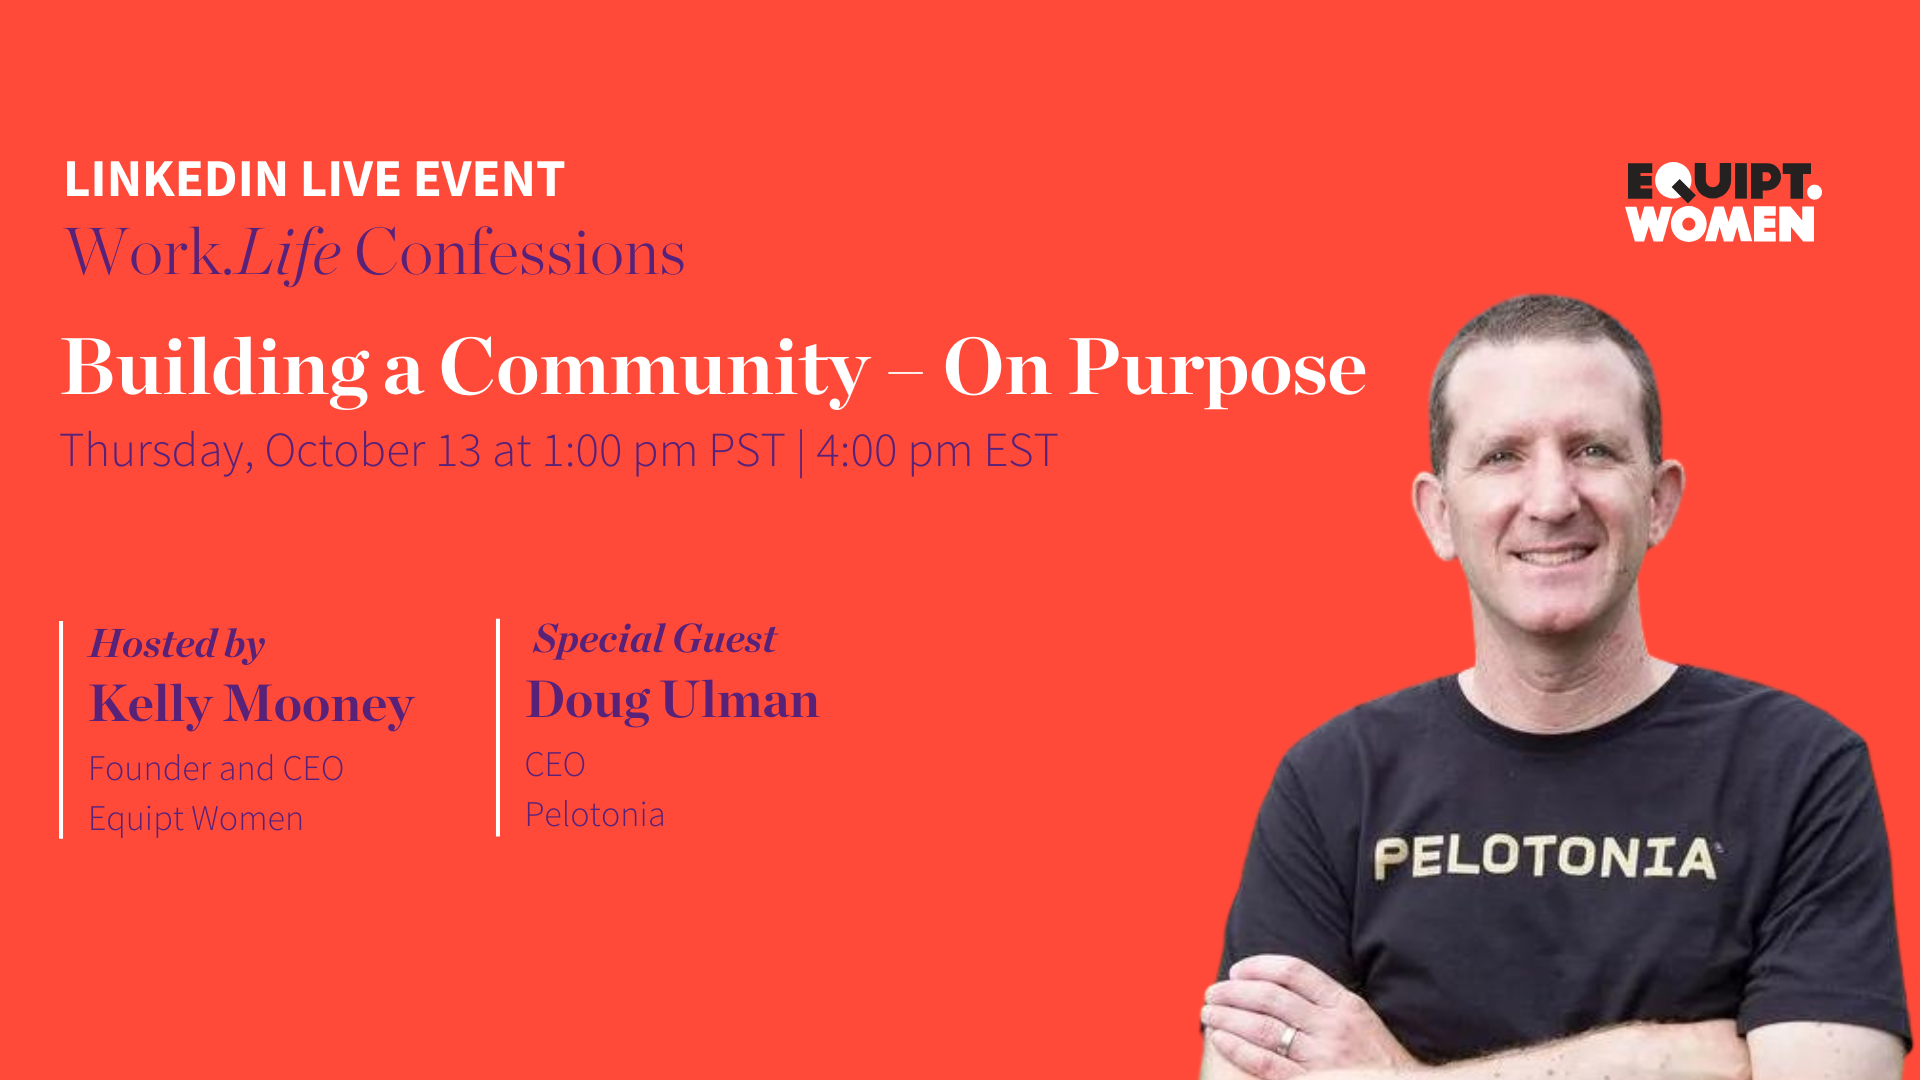 Building Community on purpose with Doug Ulman